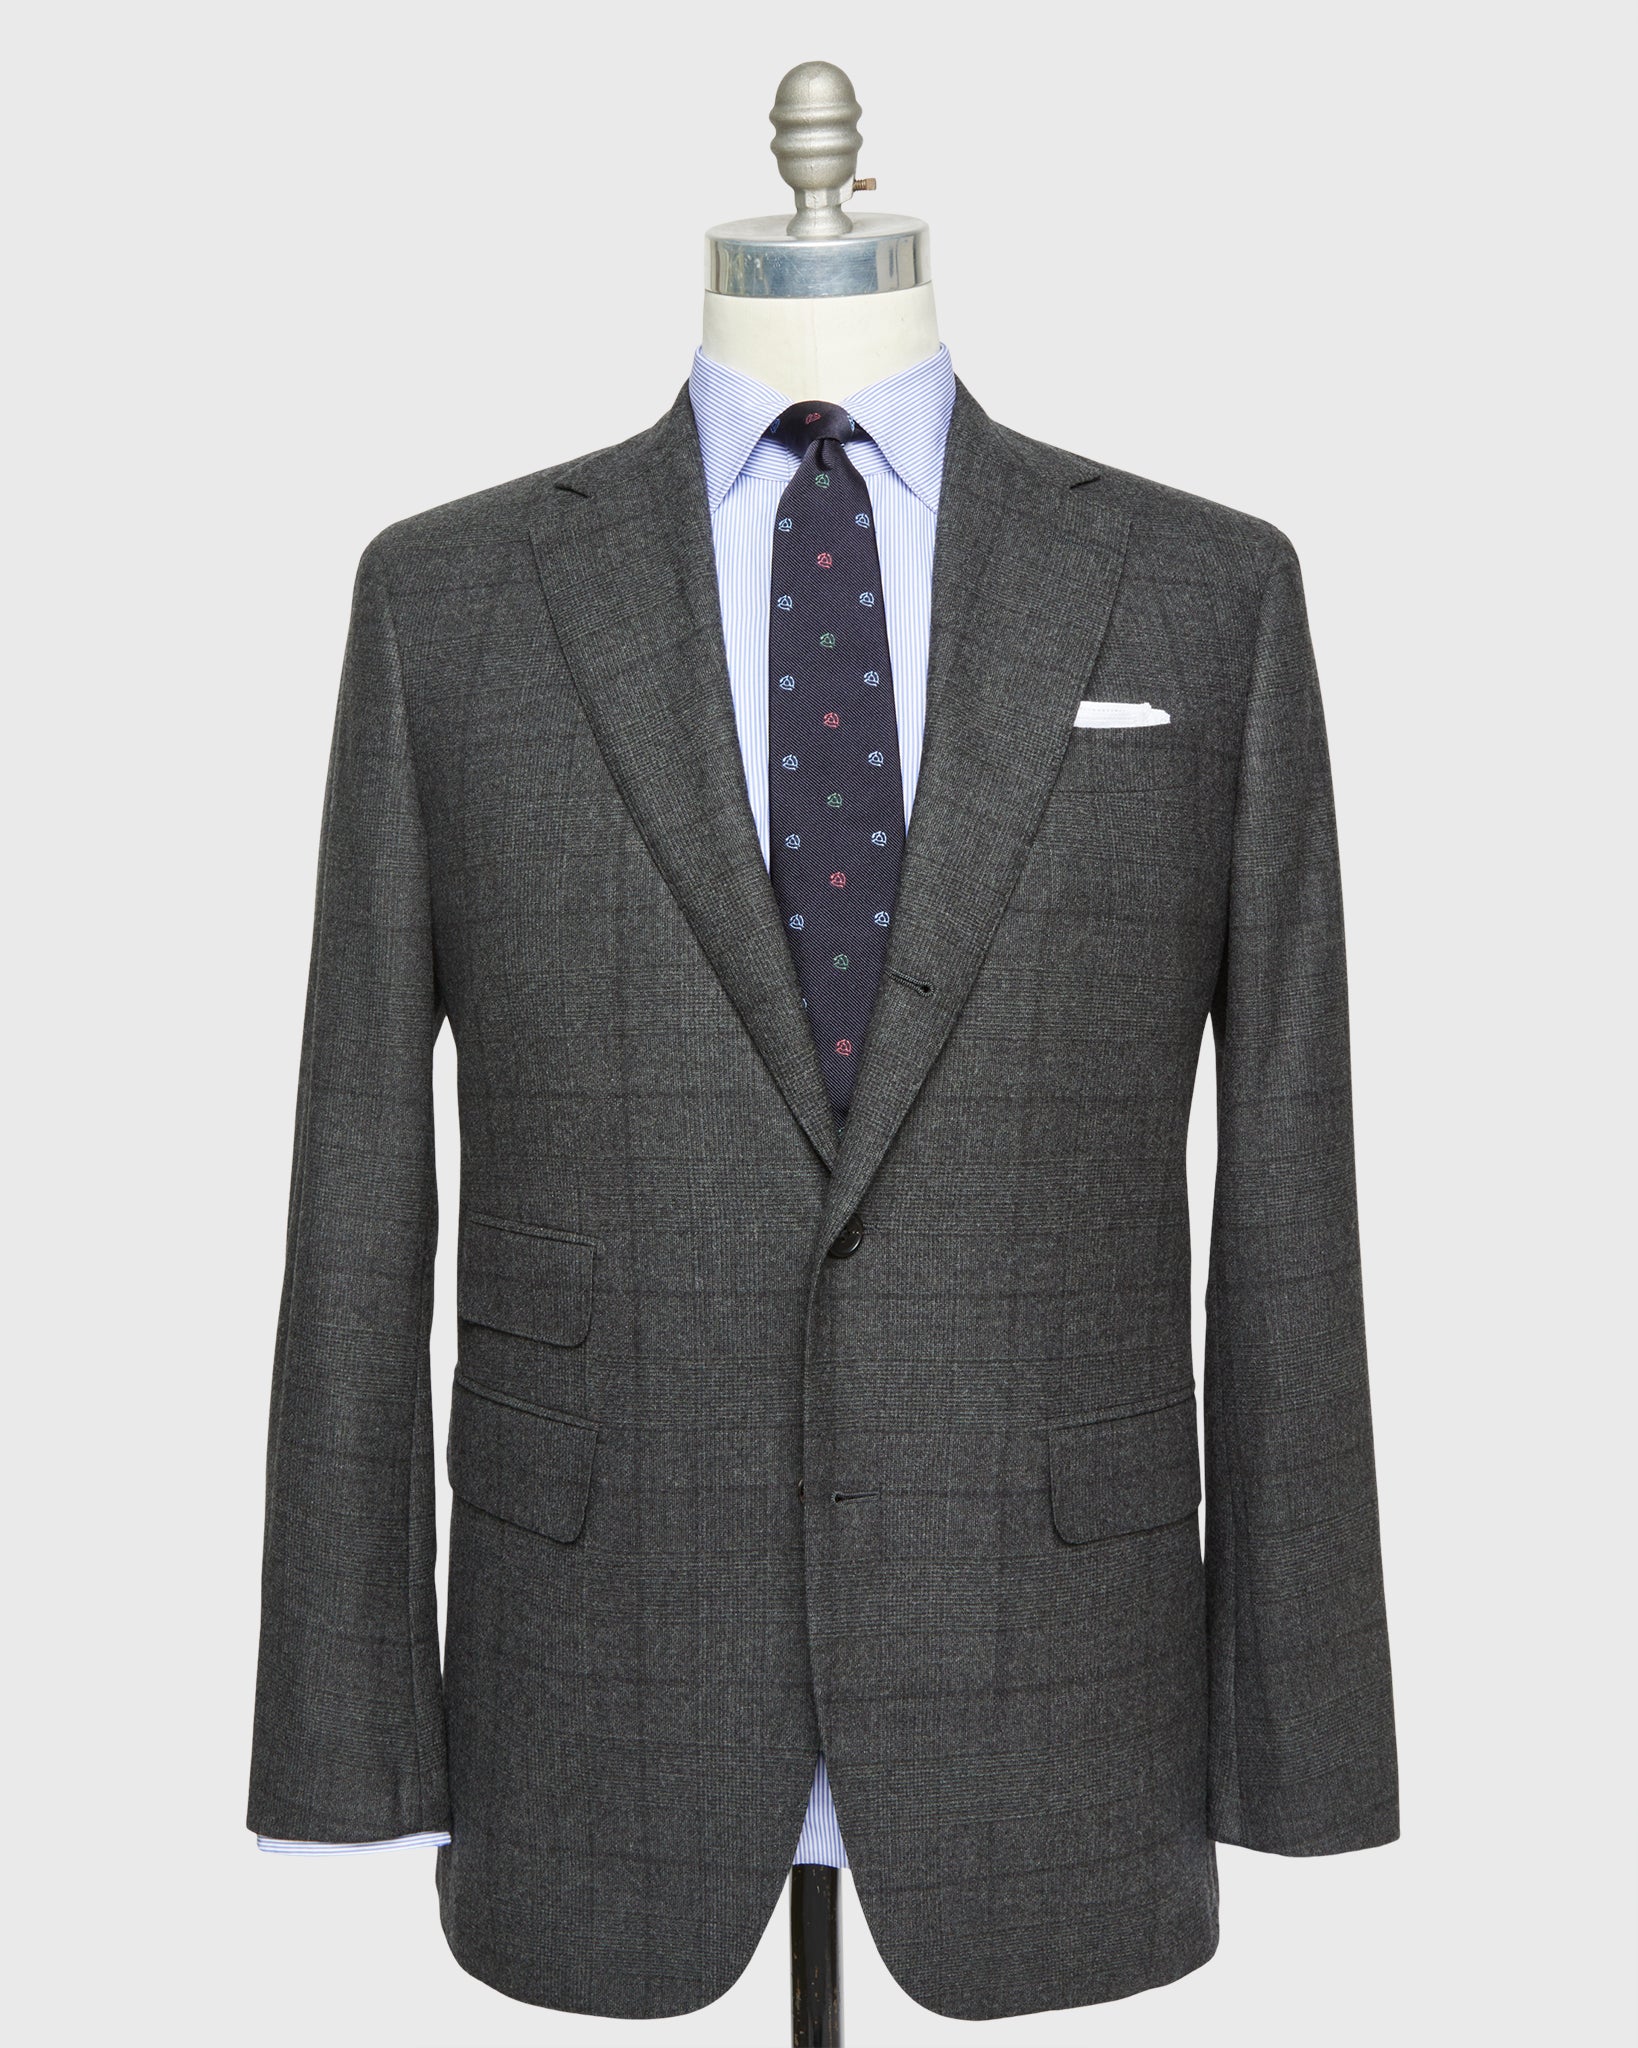 Virgil No. 2 Suit in Charcoal Glen Plaid Flannel